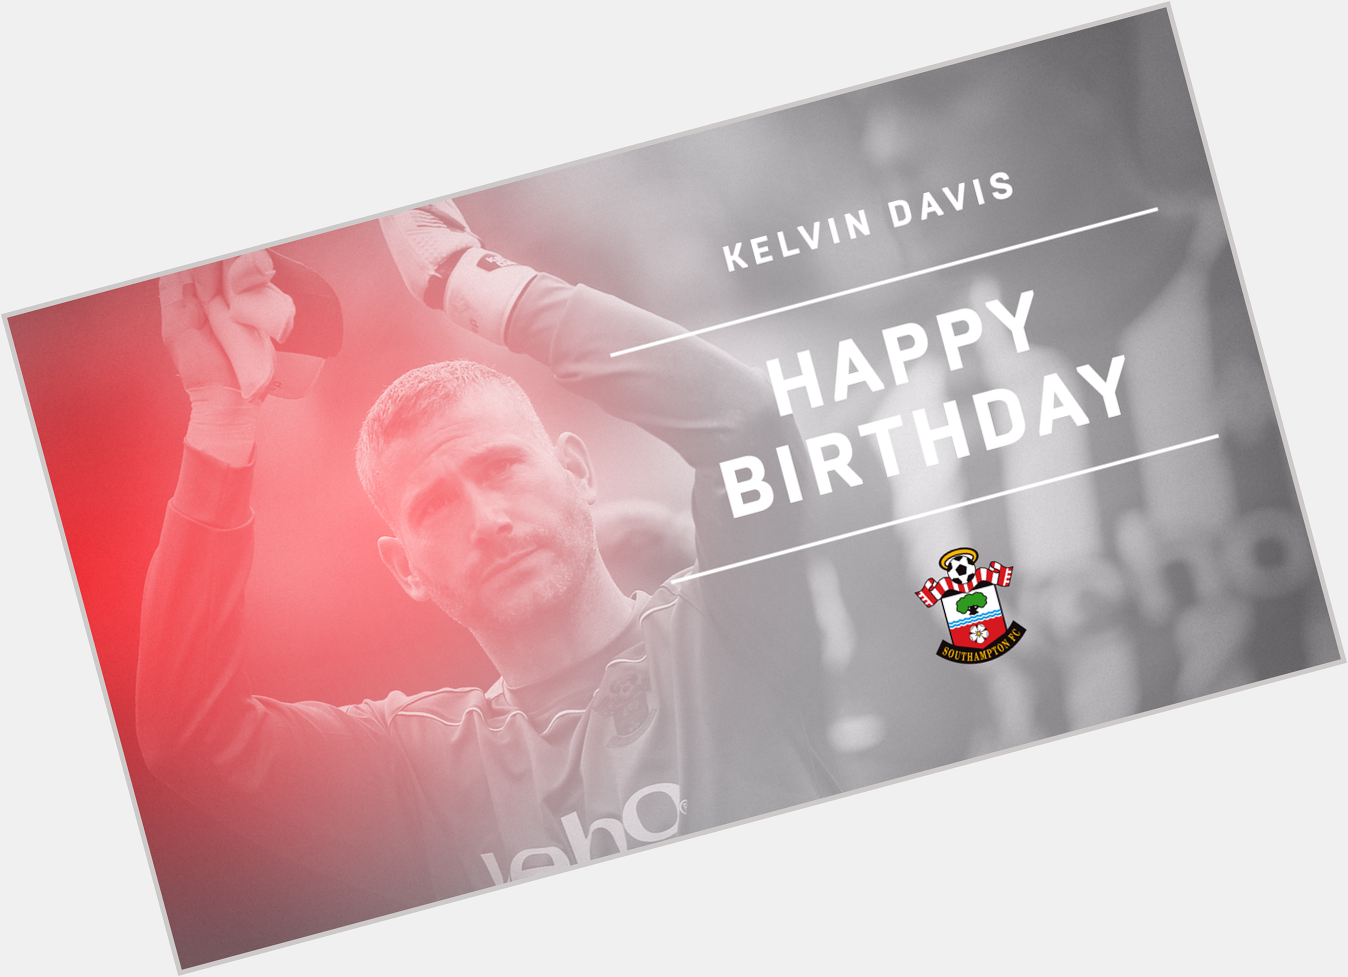 Our captain. Our leader. Our legend. Happy birthday, Kelvin Davis! 